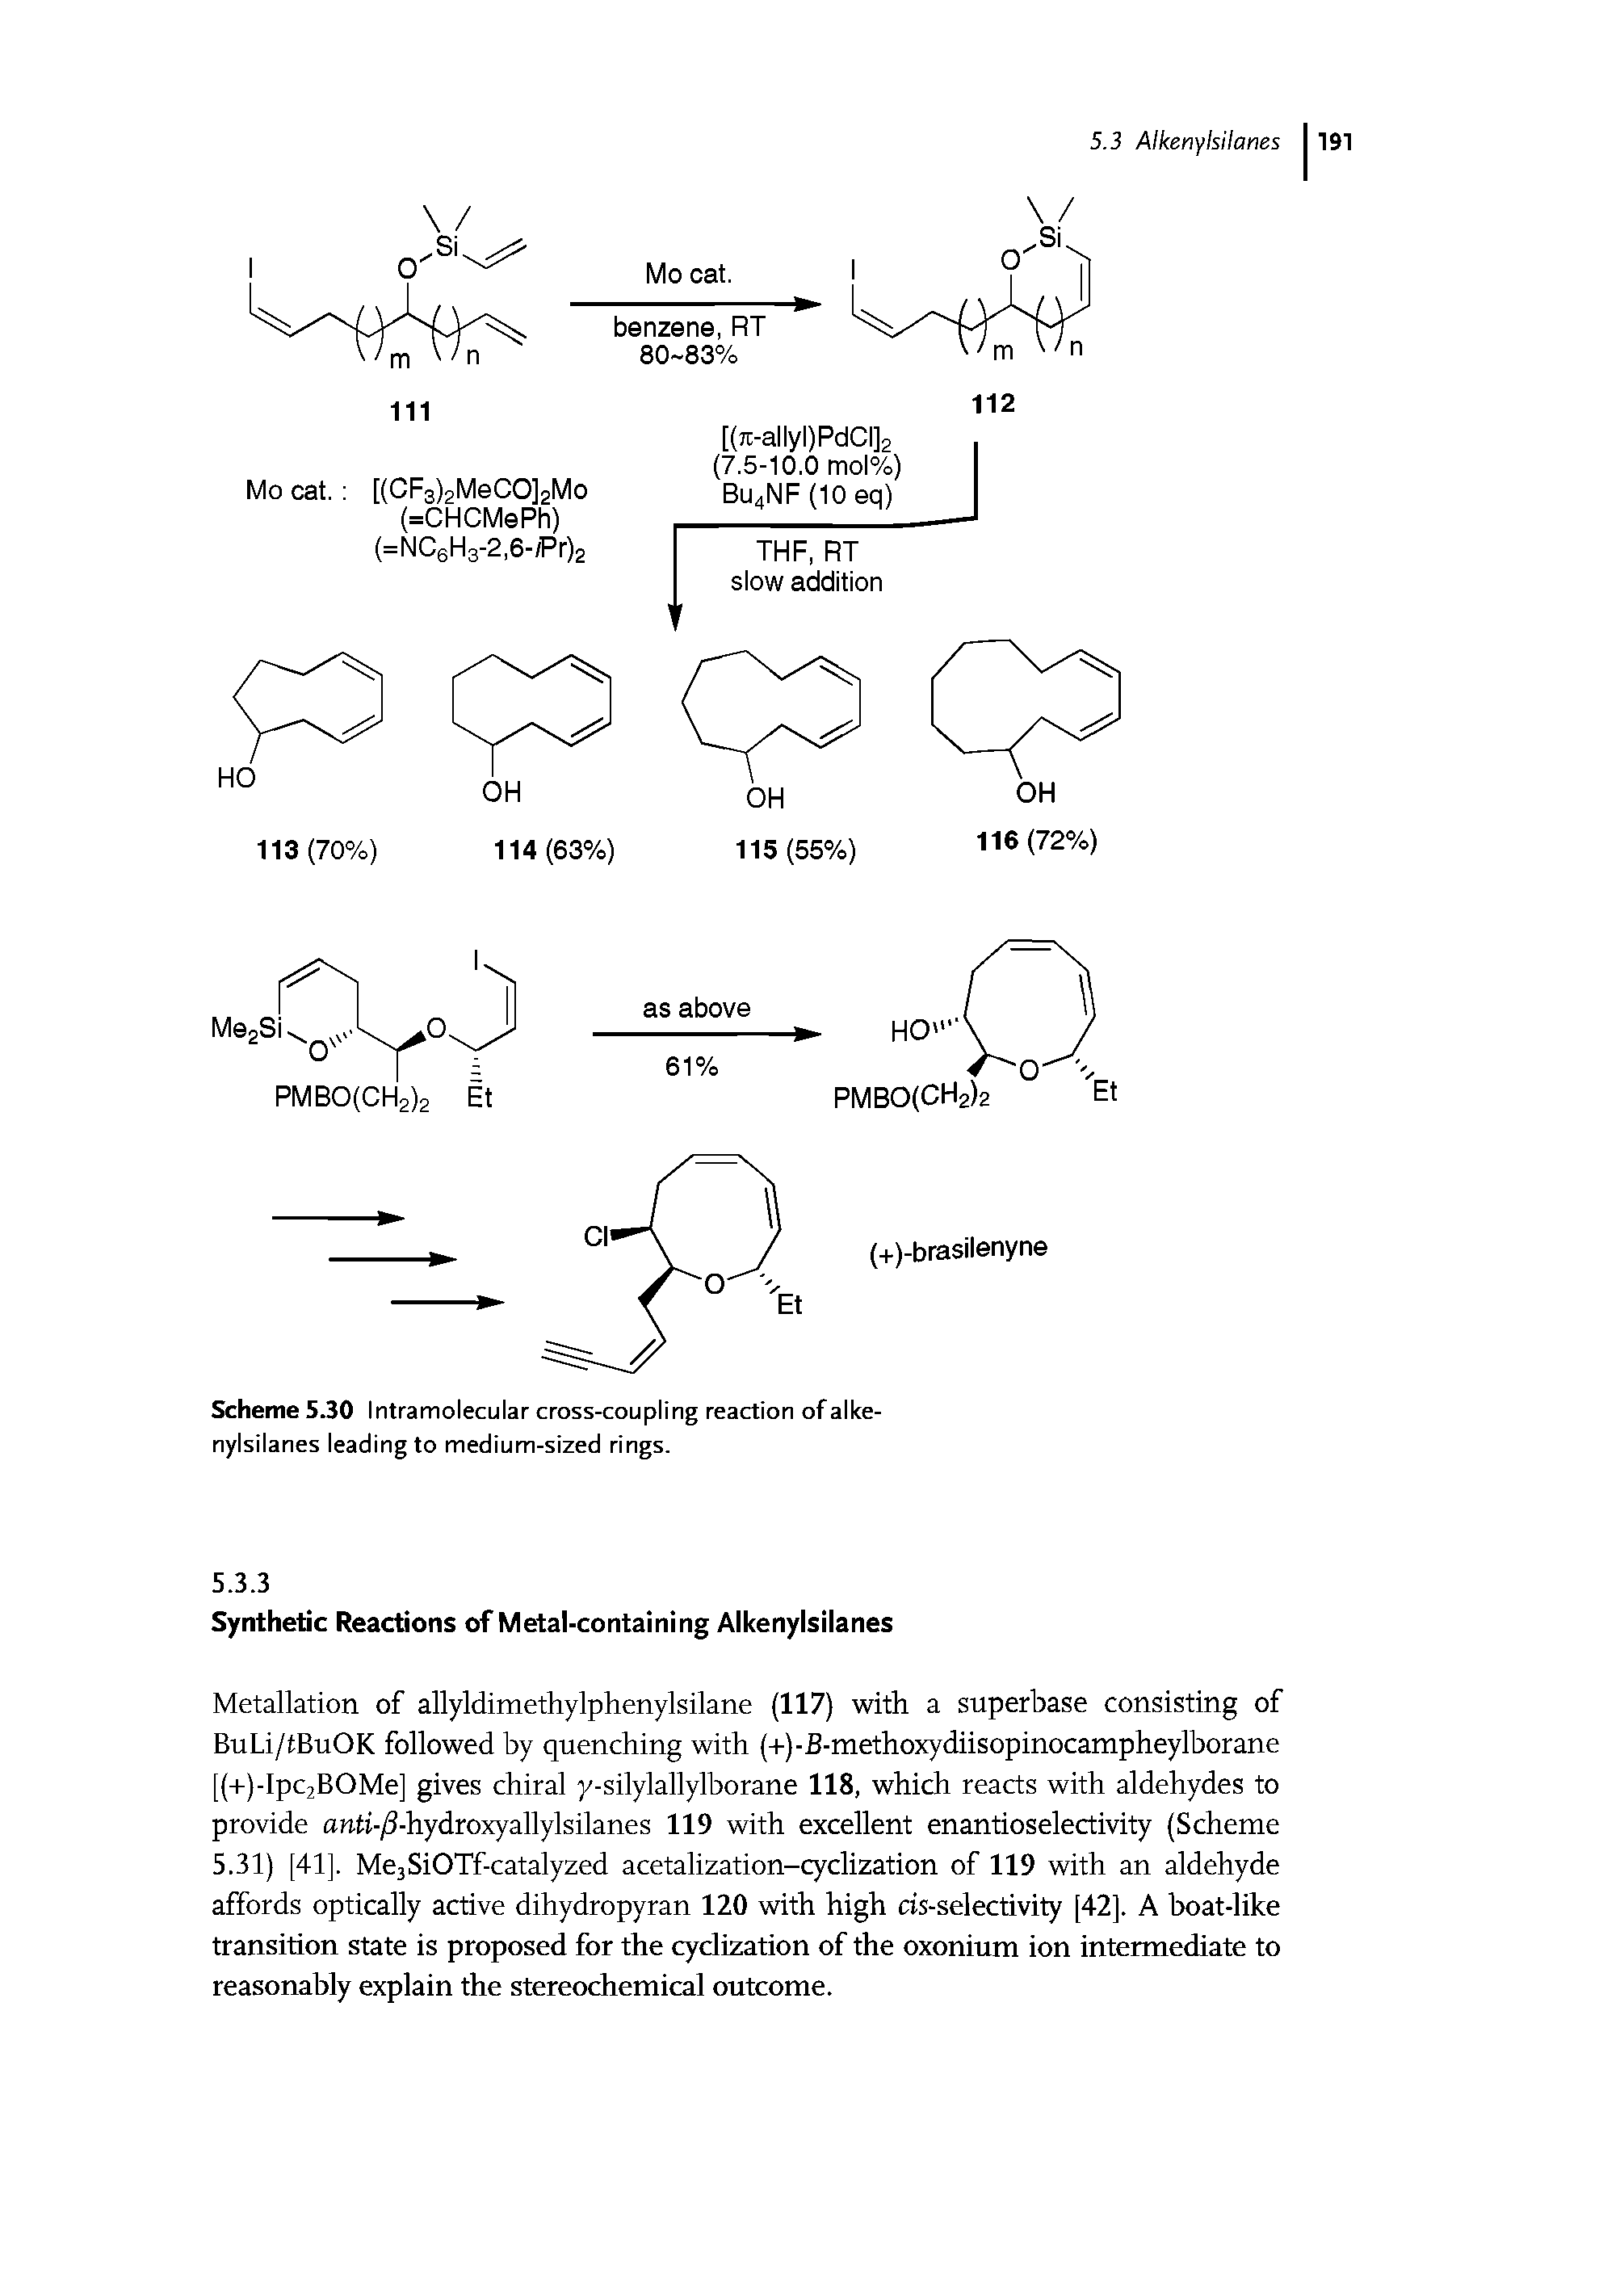 Scheme 530 Intramolecular cross-coupling reaction of alkenylsilanes leading to medium-sized rings.